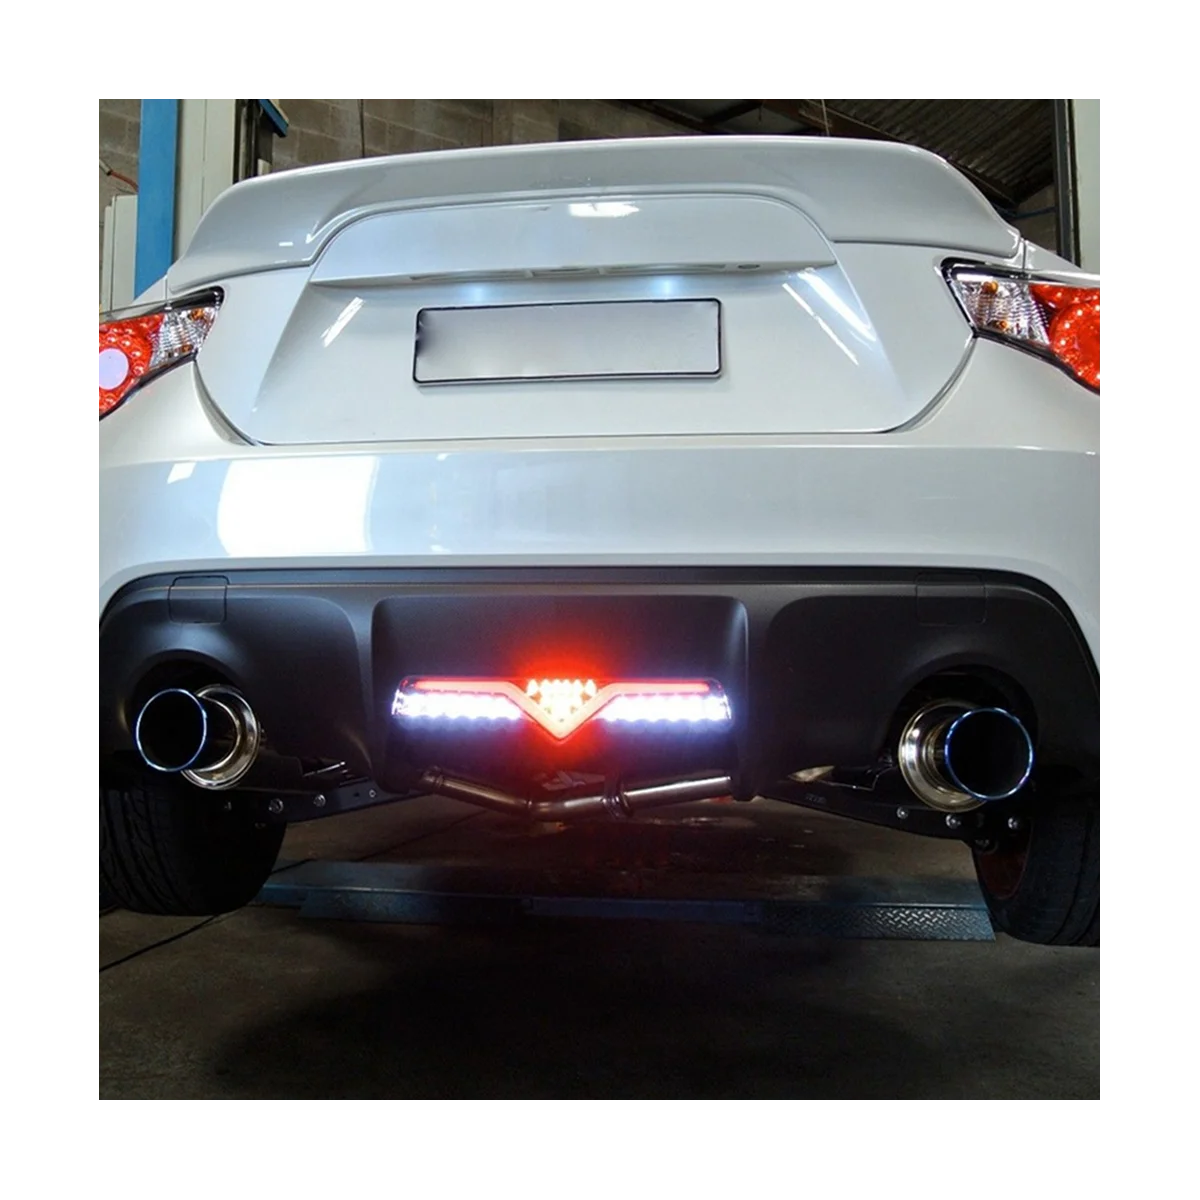 

LED Rear Fog Lamp Reverse Light Tail Brake Lamp for Toyota GT86 Subaru BRZ Scion FRS Valent/Helix